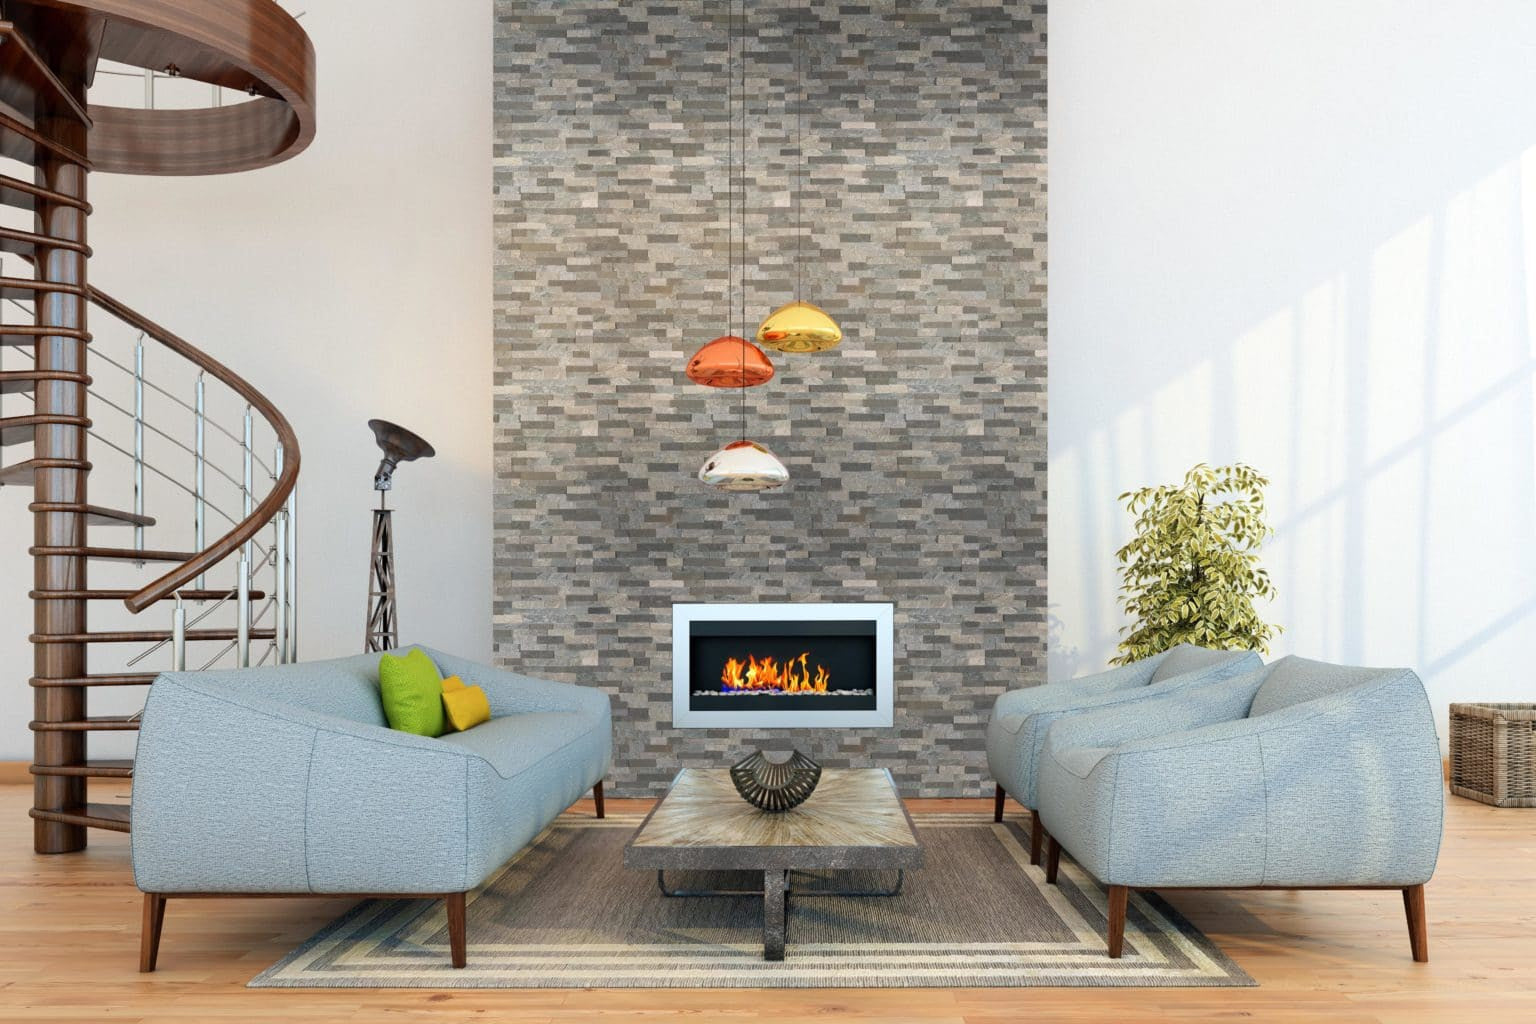 Sierra Blue Petite Landscape 4.5×16 Natural Stone Ledger Panel on Living Room Wall